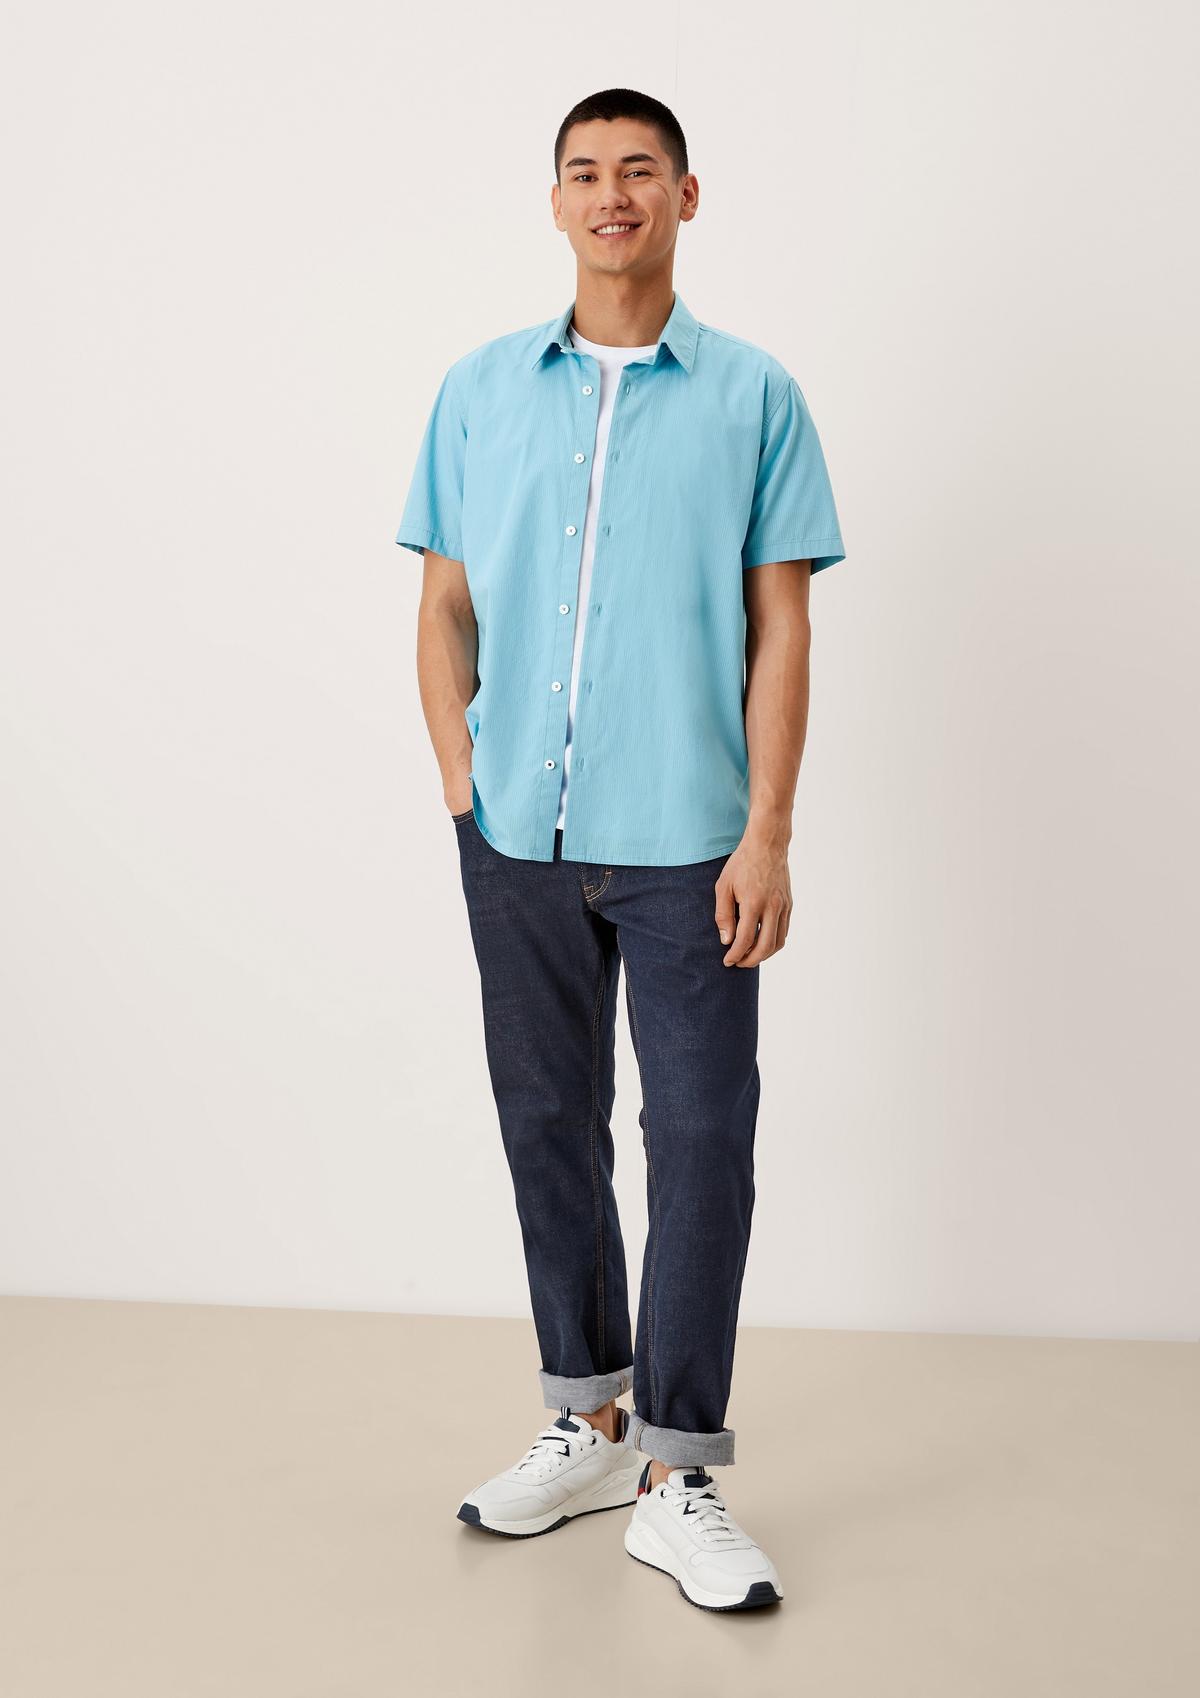 s.Oliver Regular fit: shirt with a fine stripe pattern